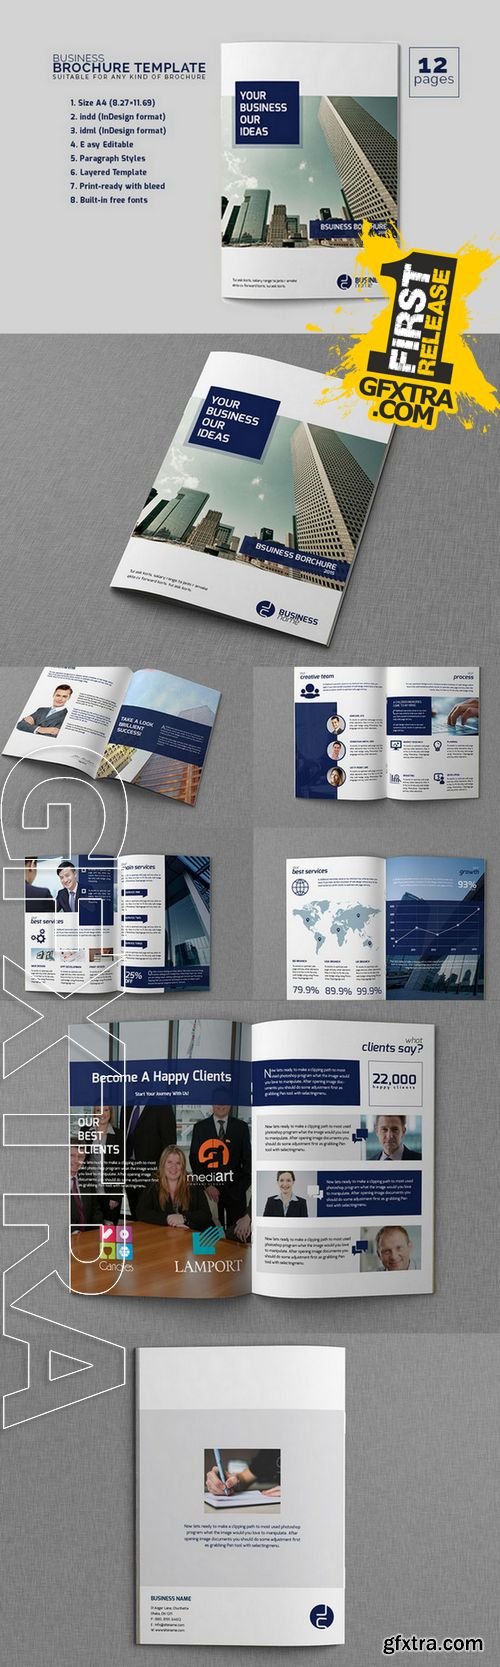 Business Brochure Template - CM 147363